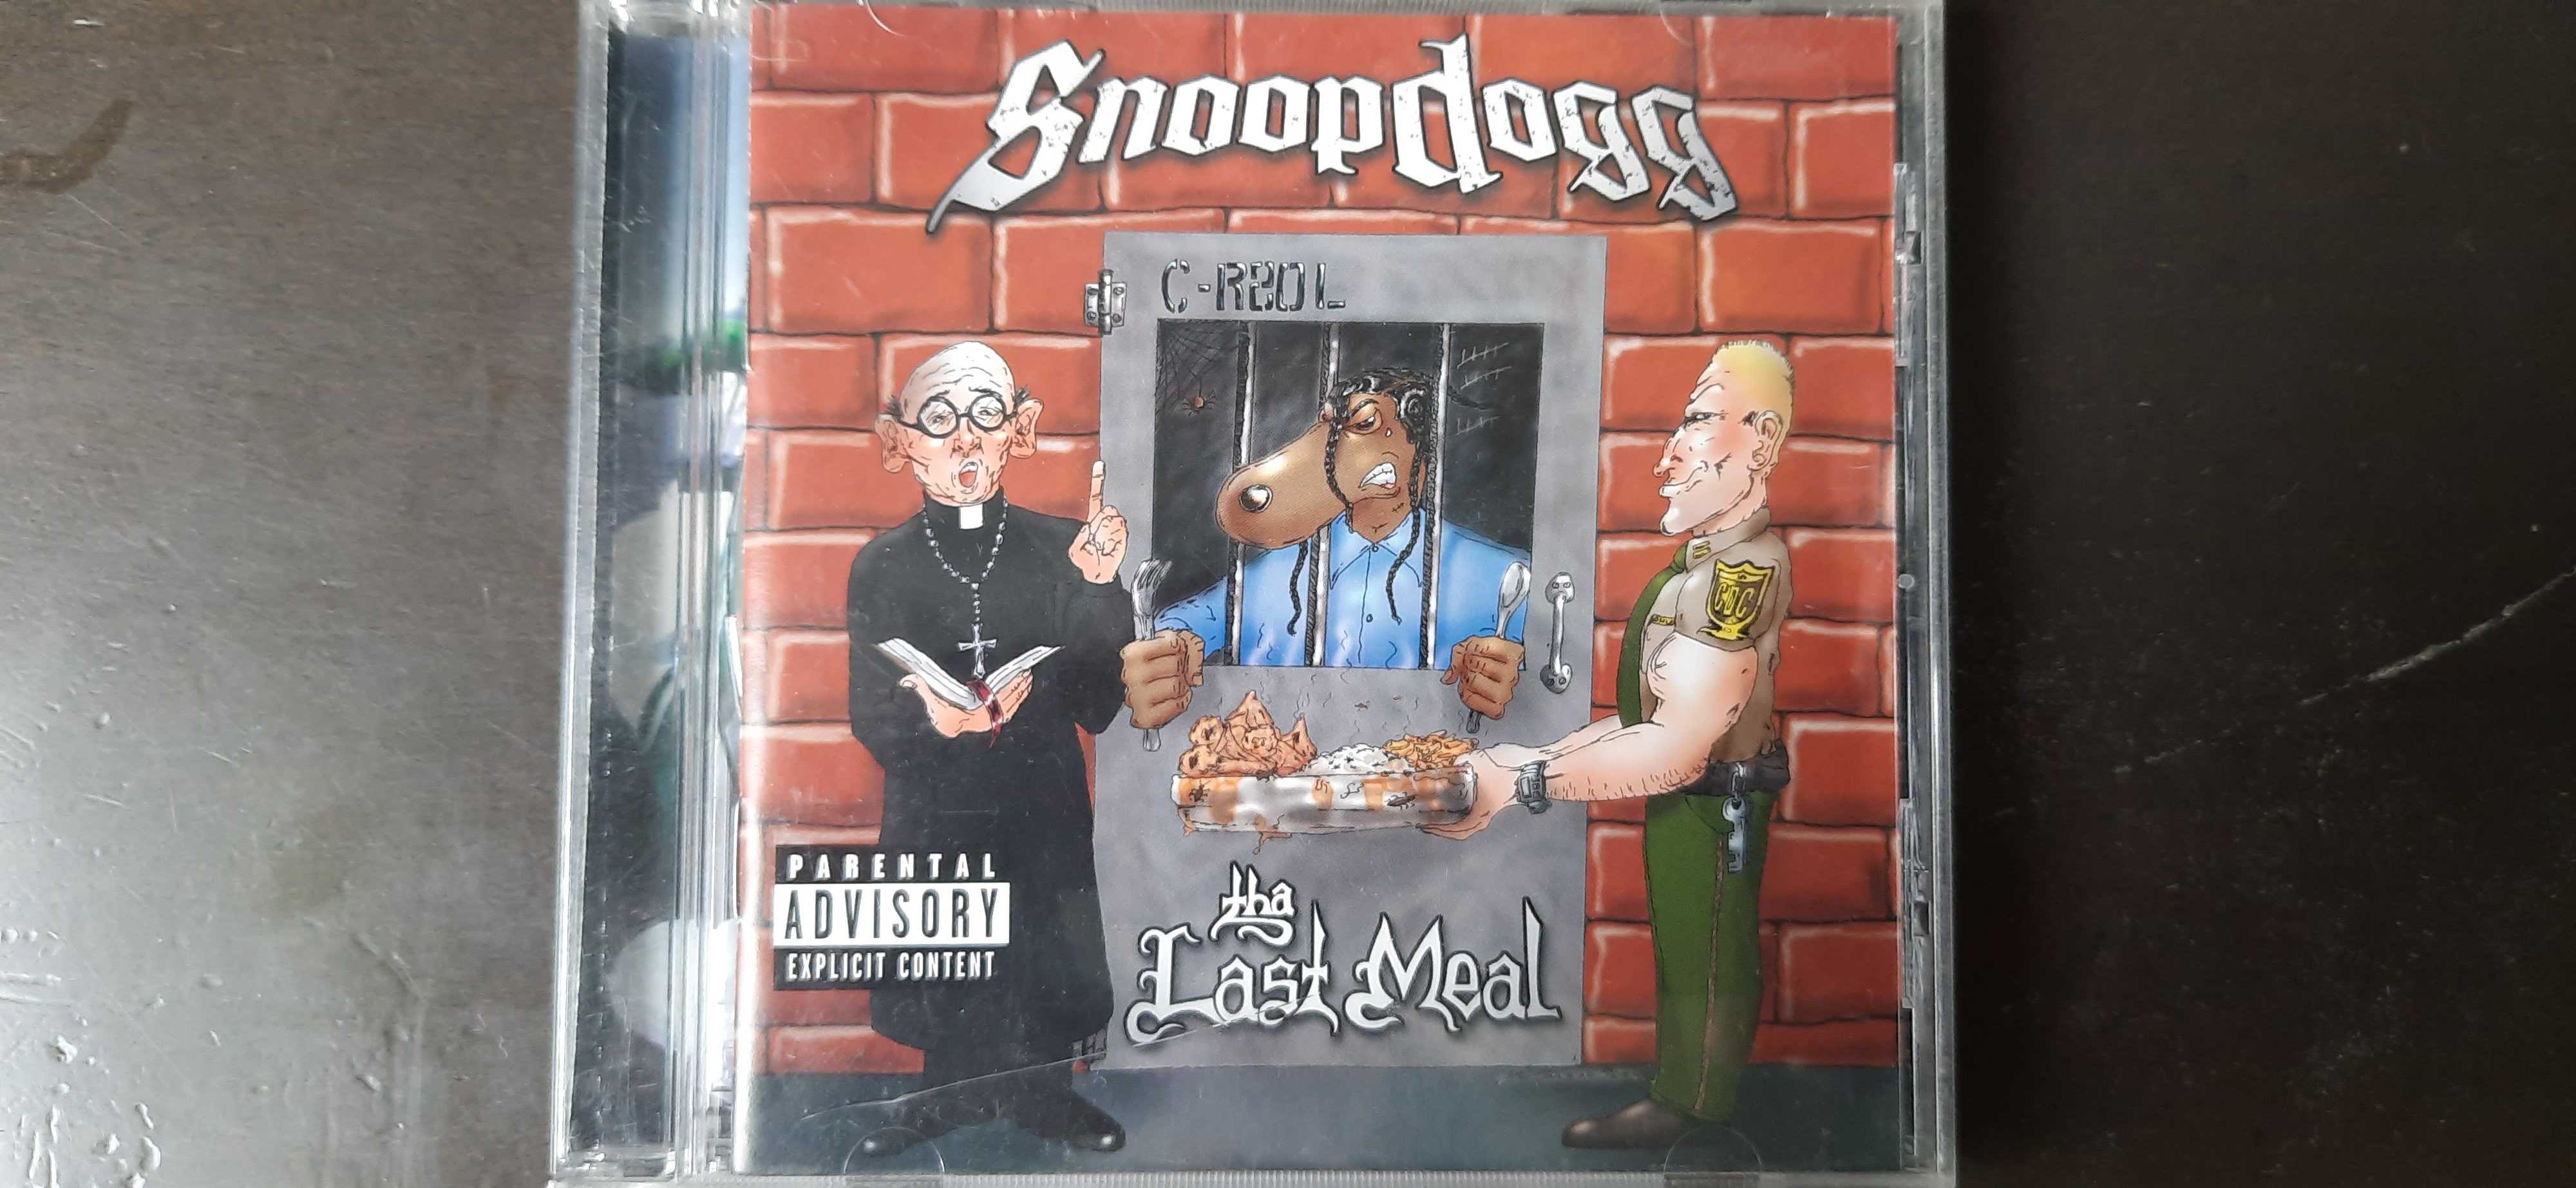 Snoop Dogg - Tha Last Meal
CD, Album